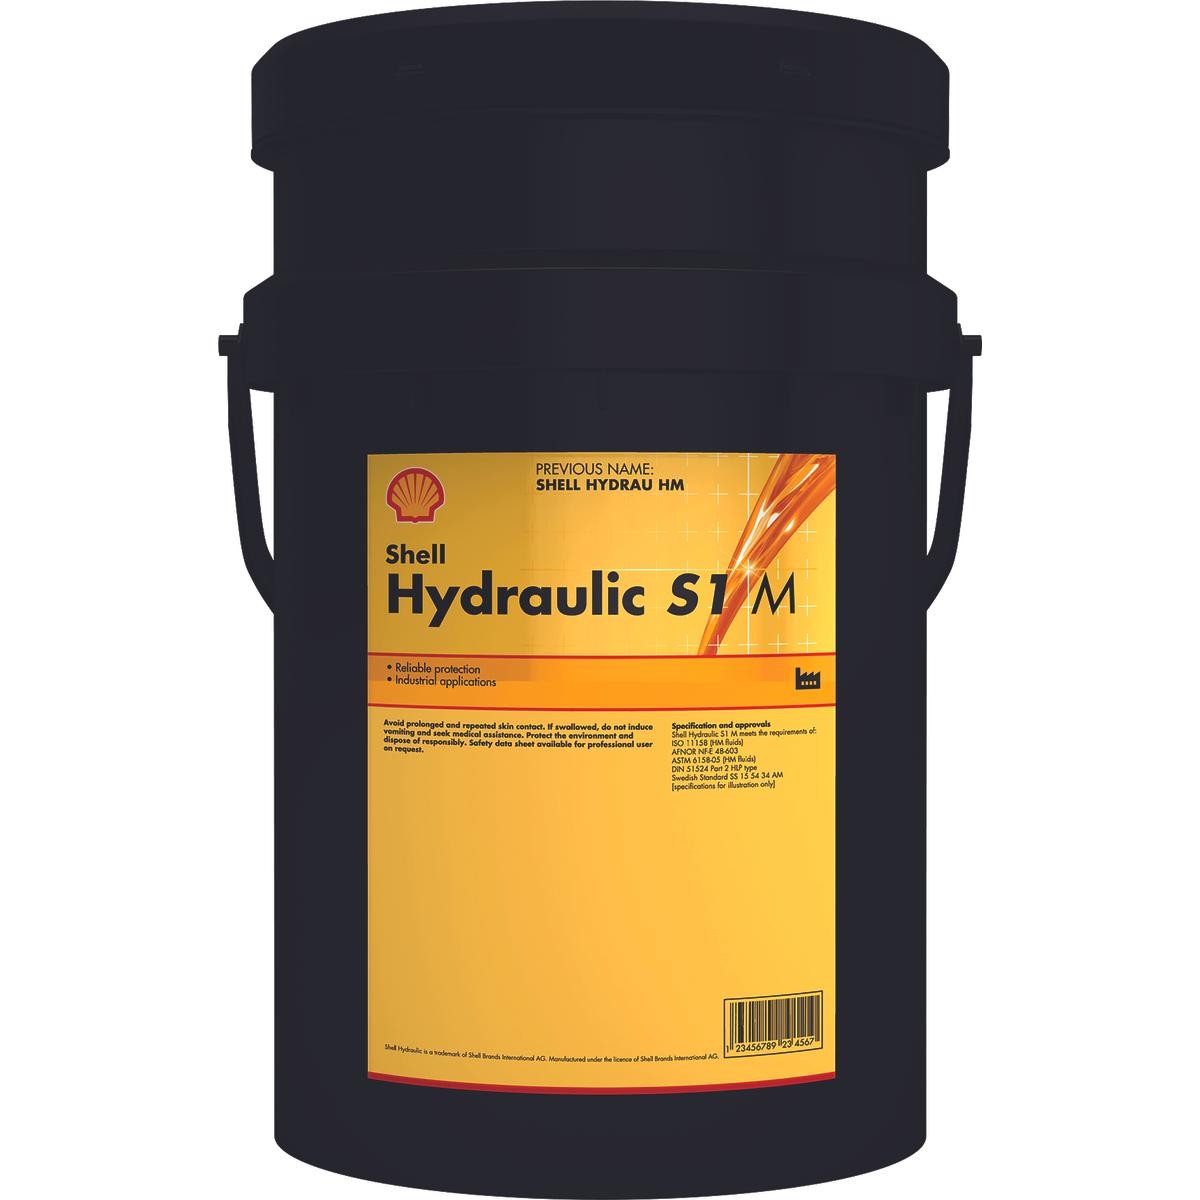 SHELL Hydraulic, S1 M46 Capacity: 20l ISO 11158 HM, DIN 51524-2 HLP Hydraulic fluid 550027156 buy